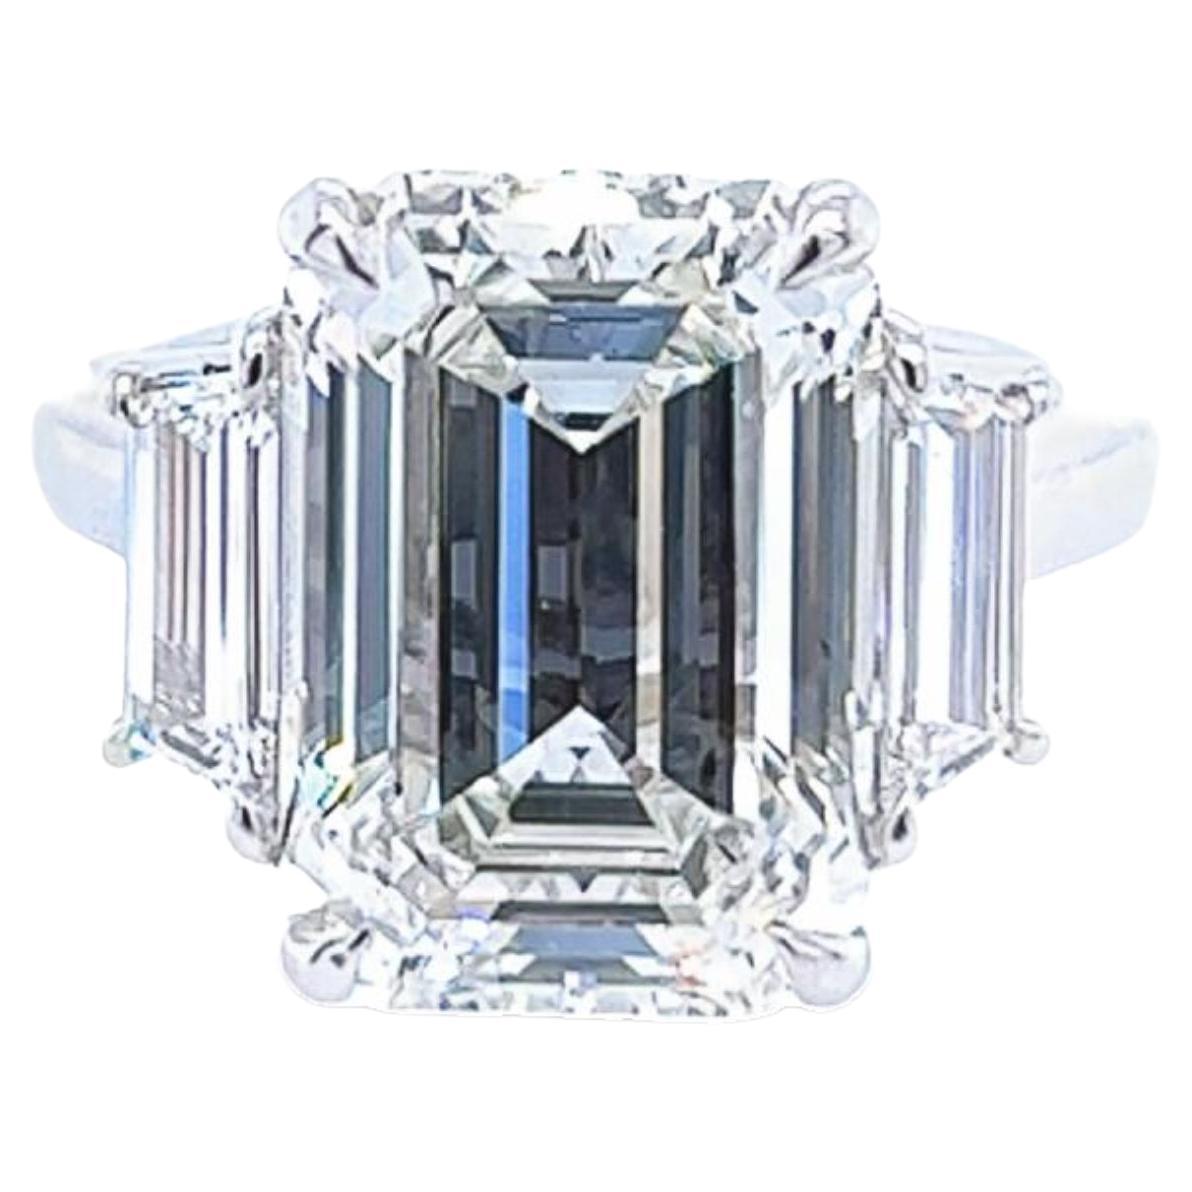 David Rosenberg 8.37 Carat Emerald Cut GIA Three Stone Diamond Engagement Ring